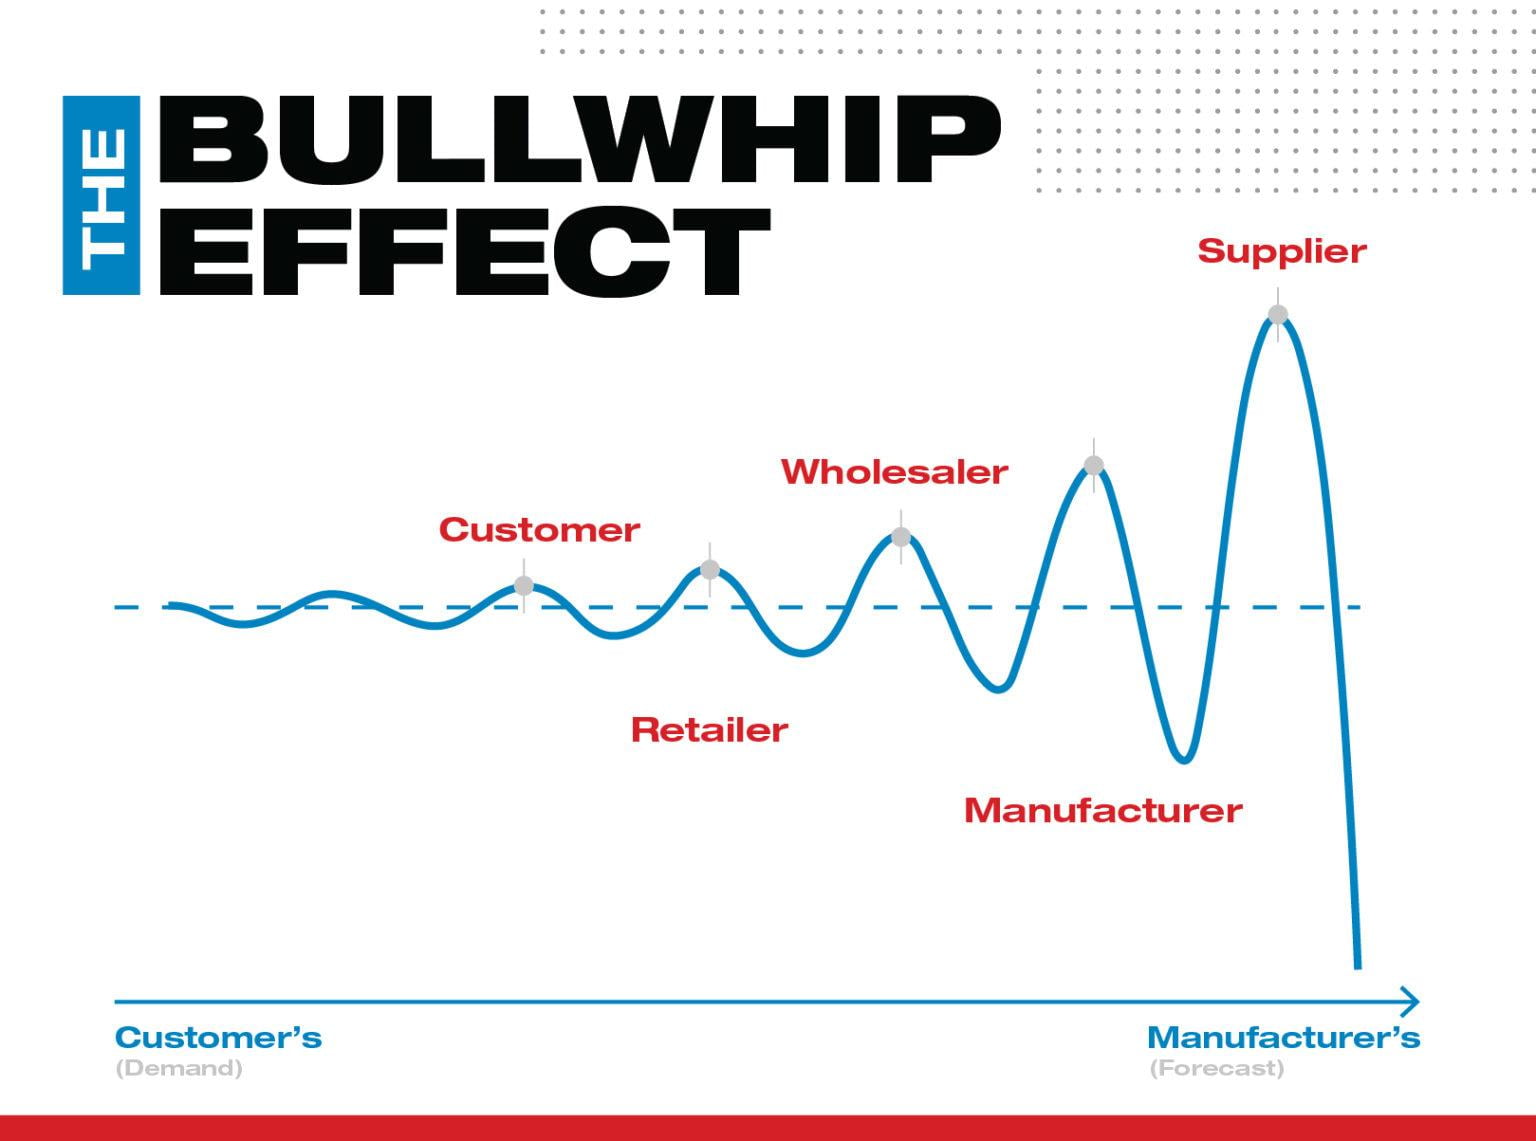 bullwhip effect là gì